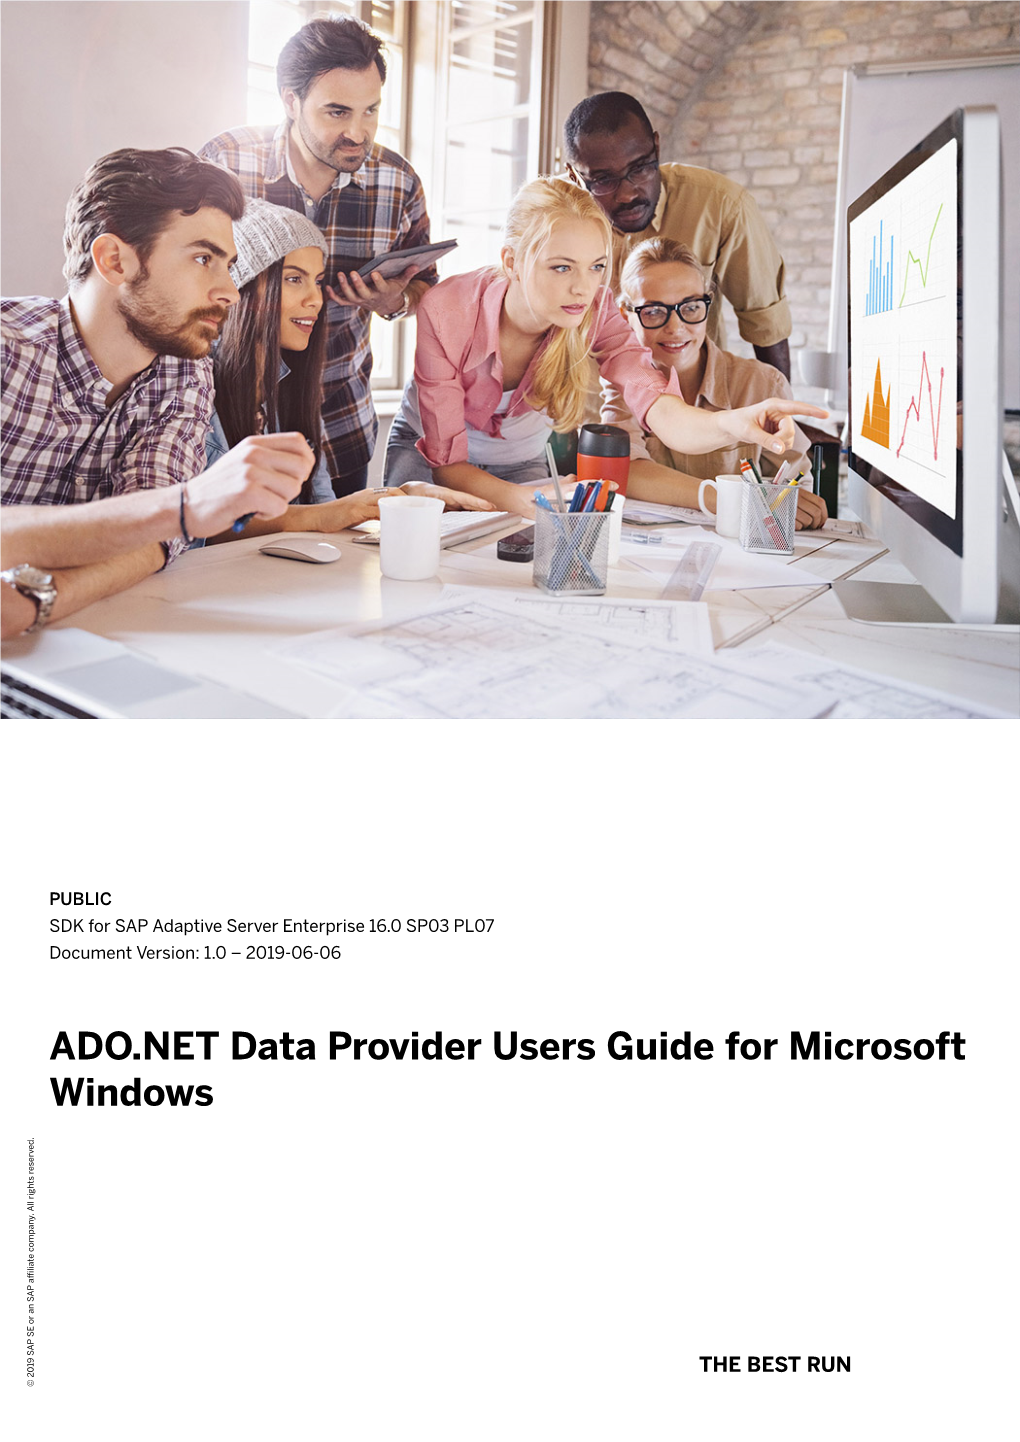 ADO.NET Data Provider Users Guide for Microsoft Windows Company